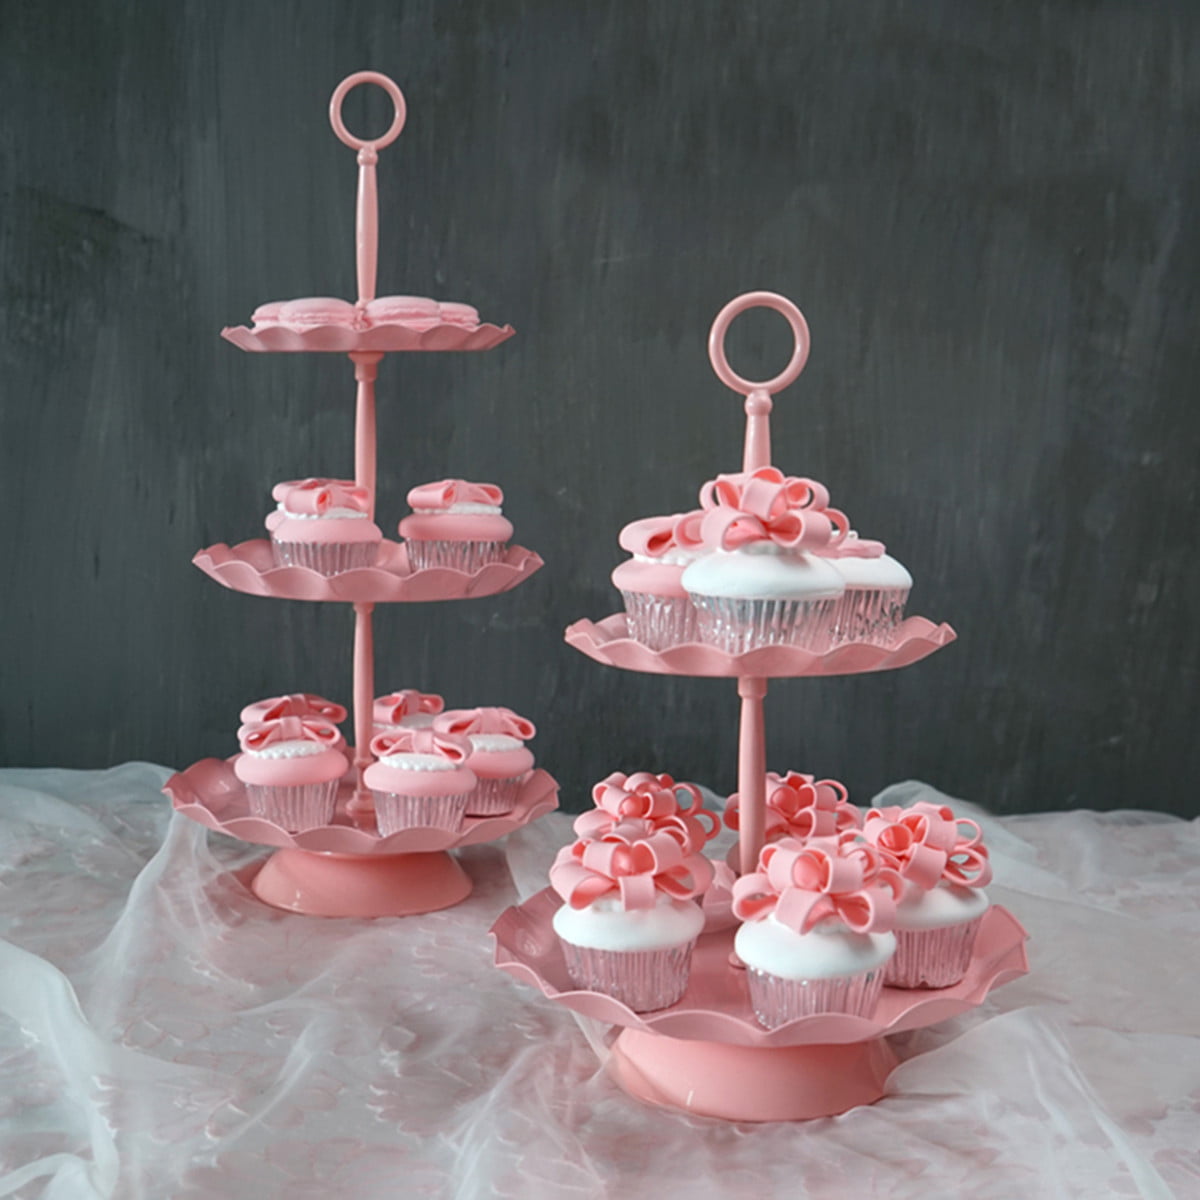 2/3 Tier Cake Stand Tower Set Cupcake Holder Party Wedding Dessert Display Well 